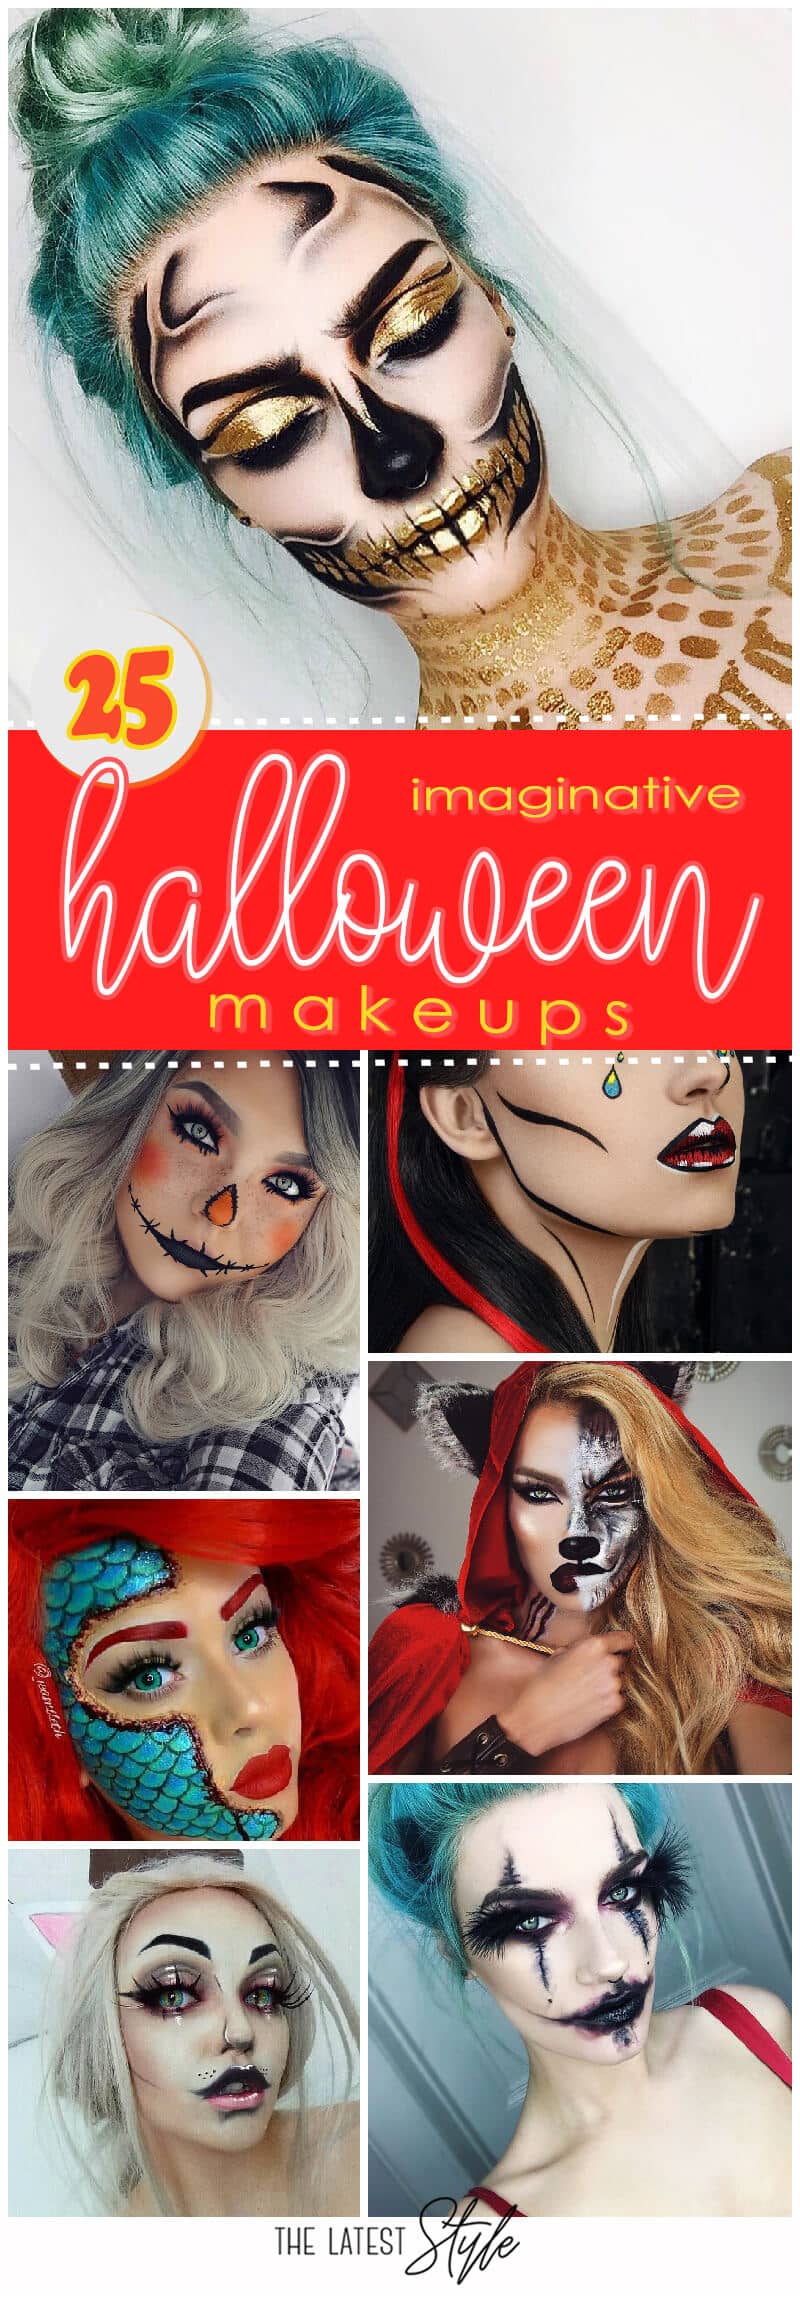 25 Imaginative Halloween Makeup Inspirations From The Instagram